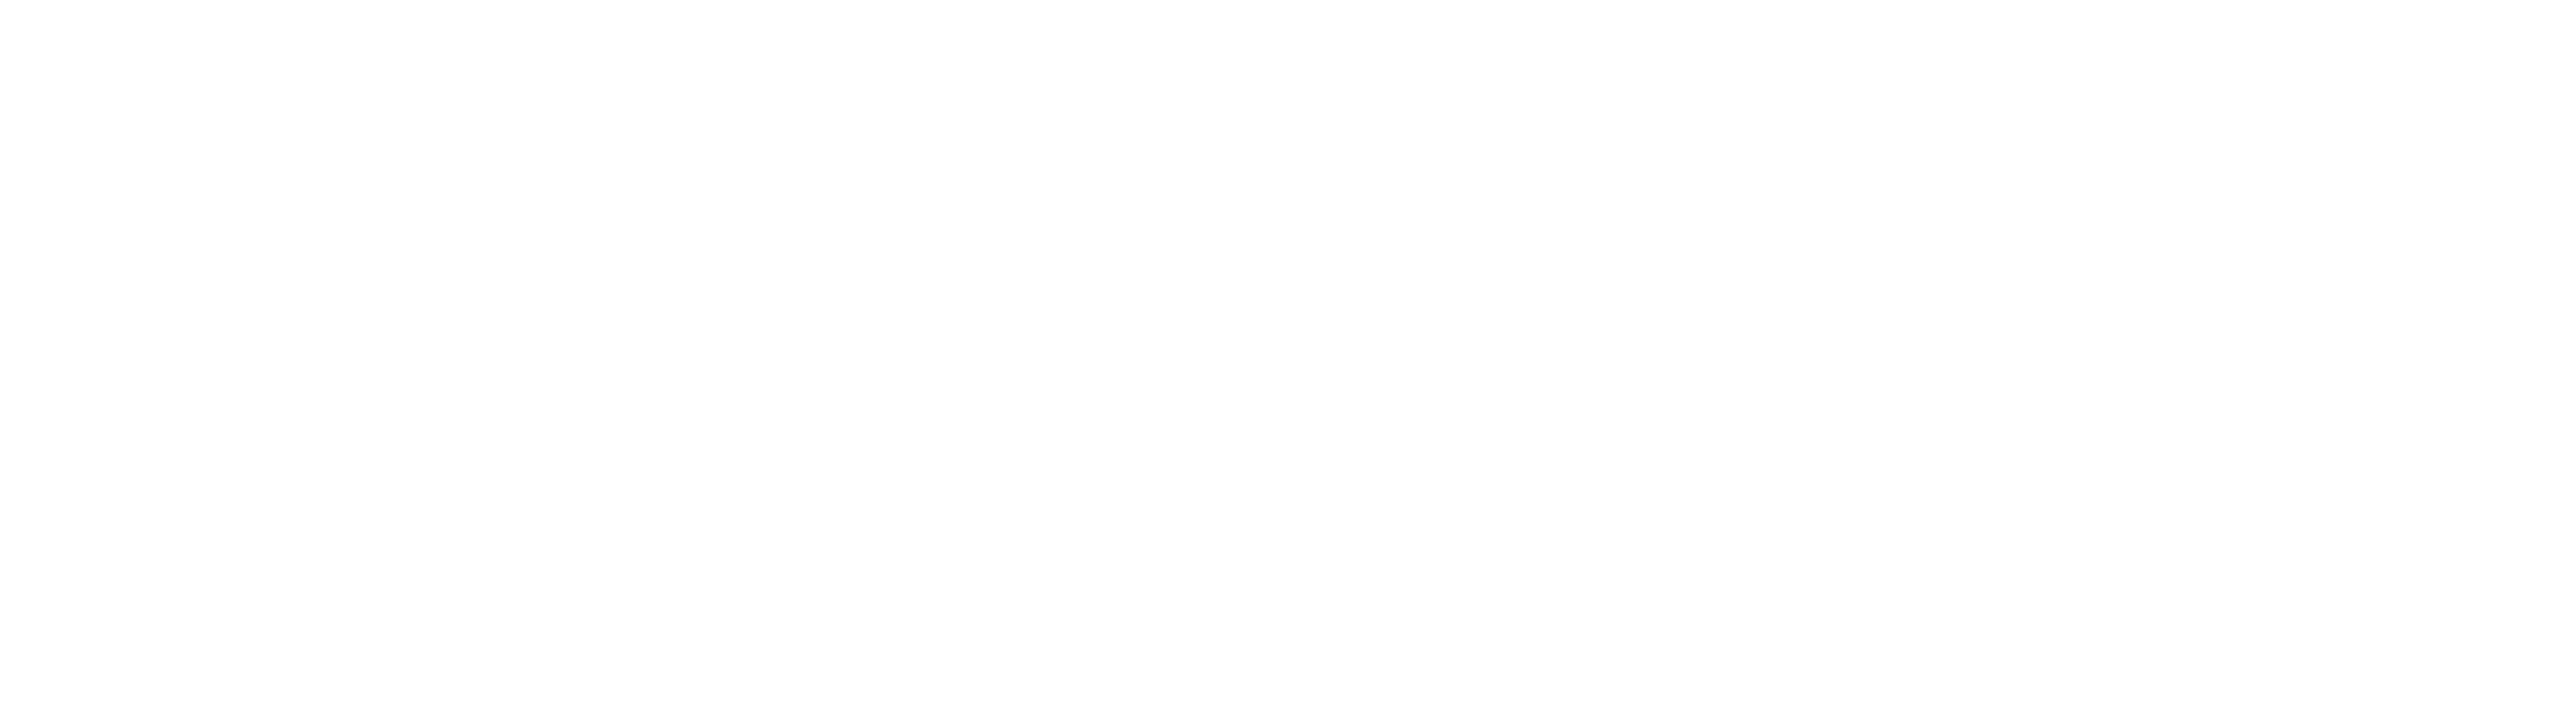 moxie brands logo